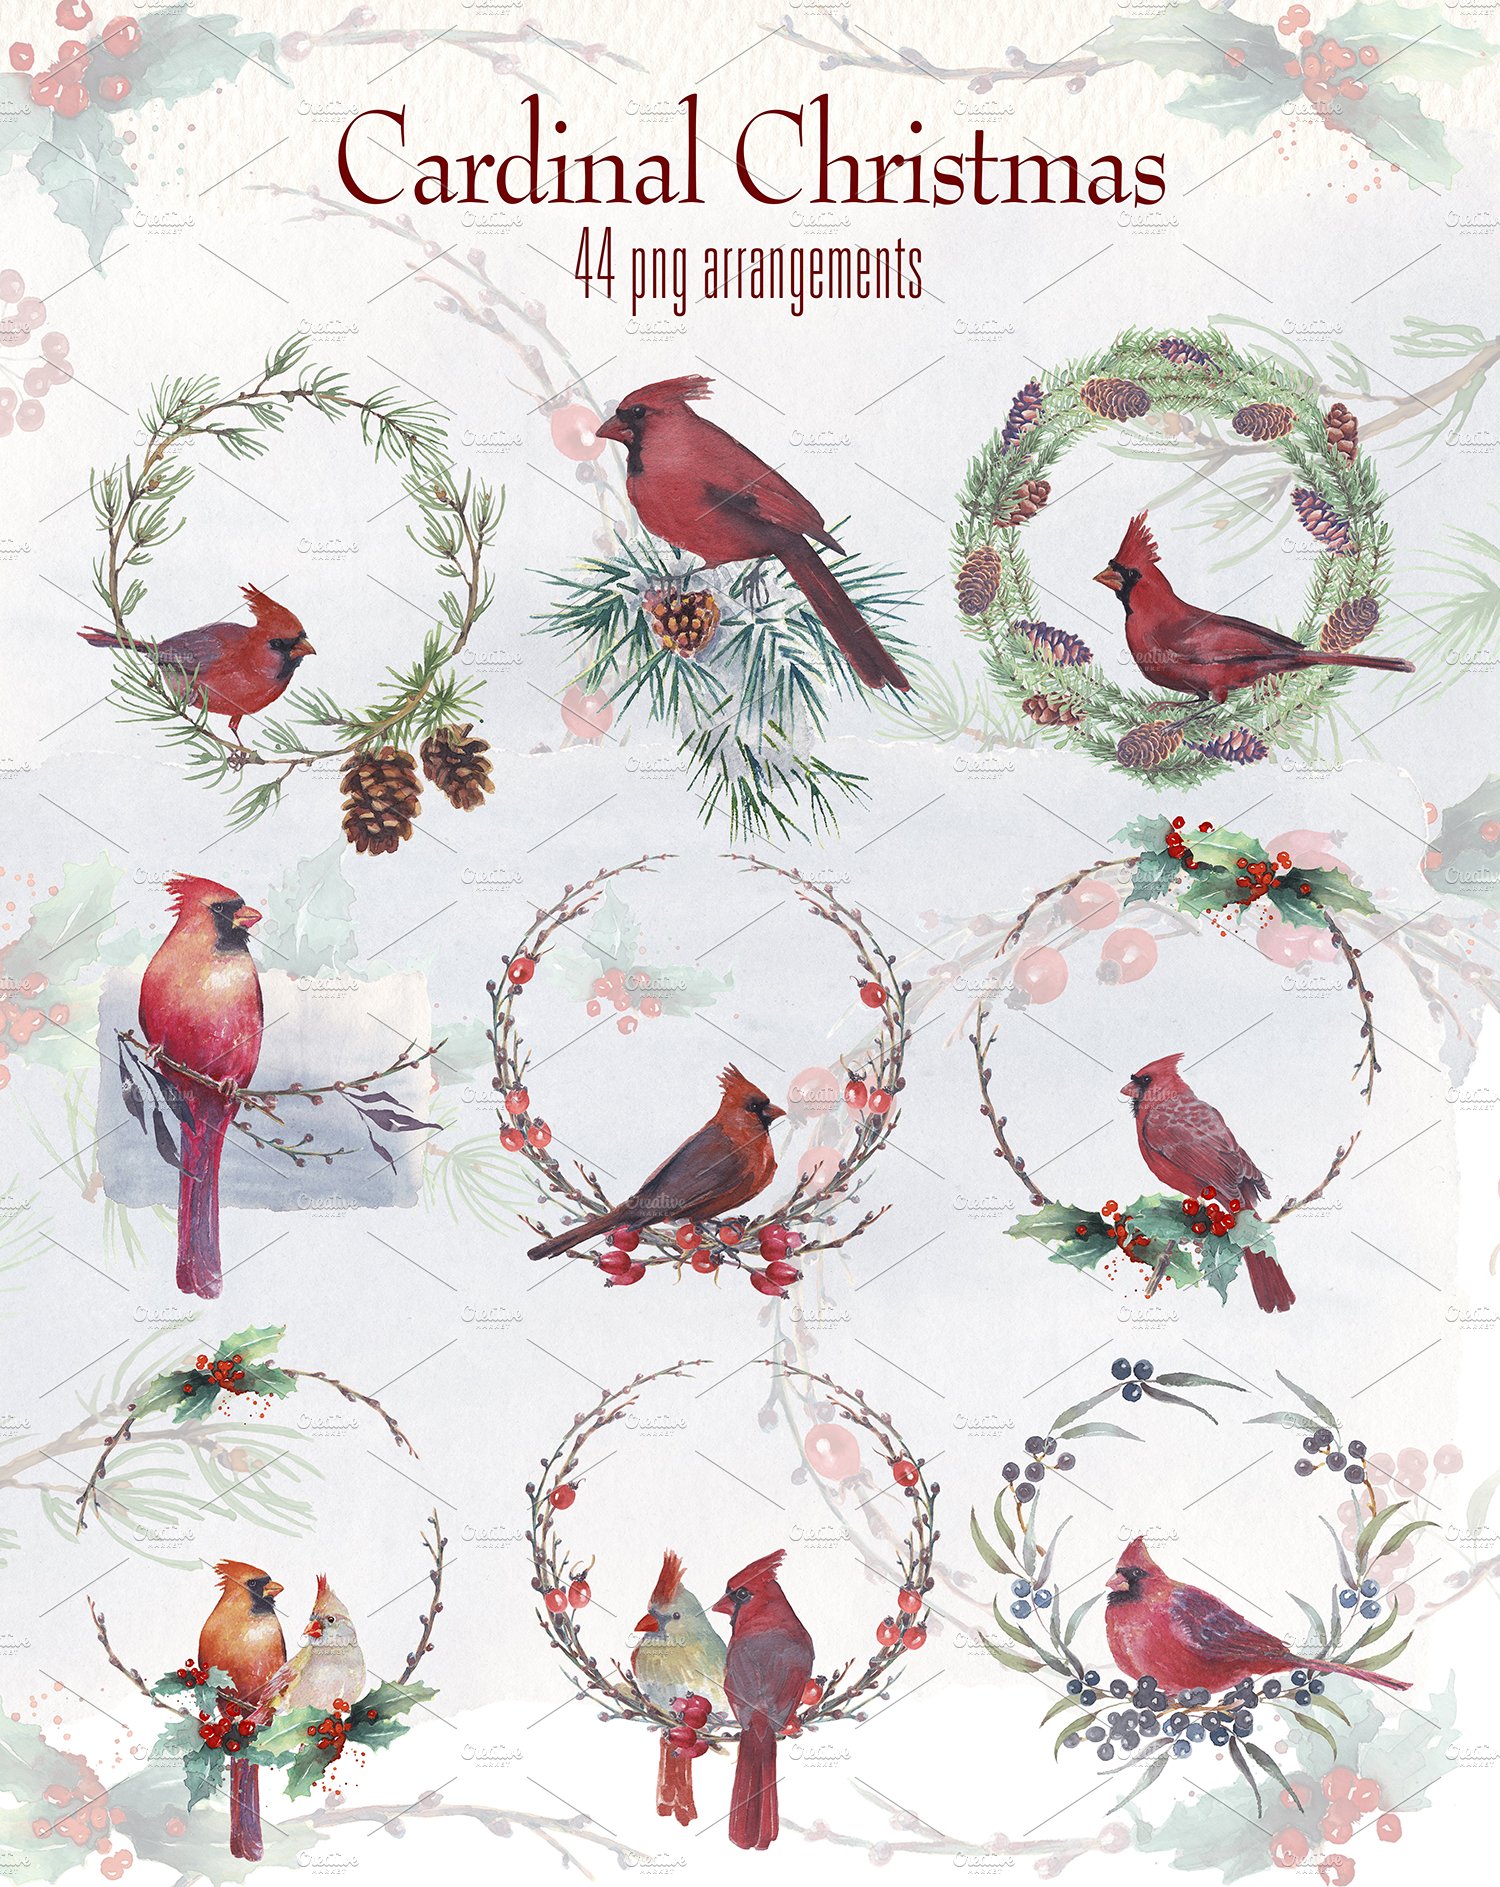 Creative Christmas wreathes with birds.